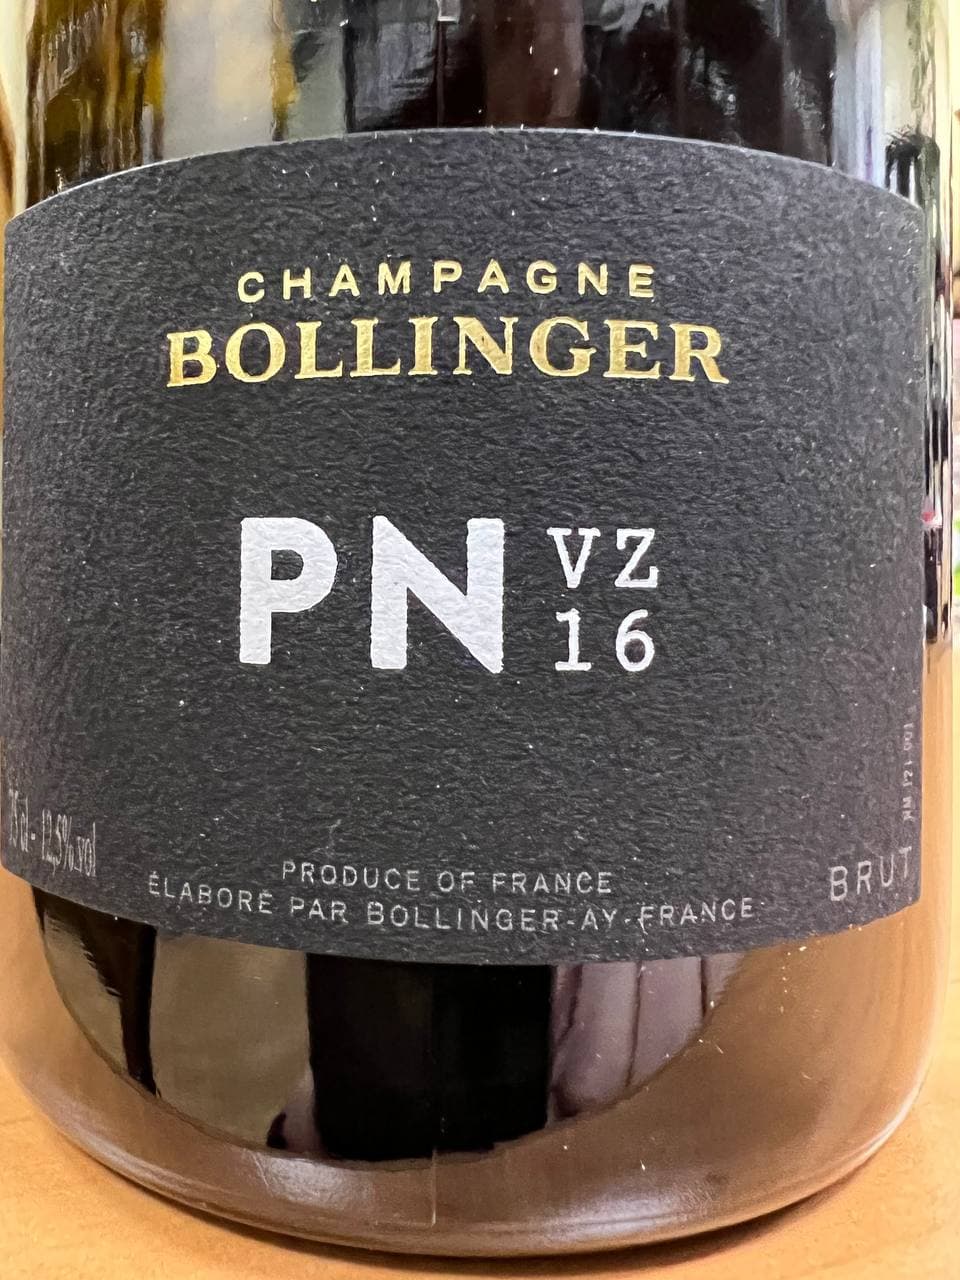 Champagne Bollinger PN vz16